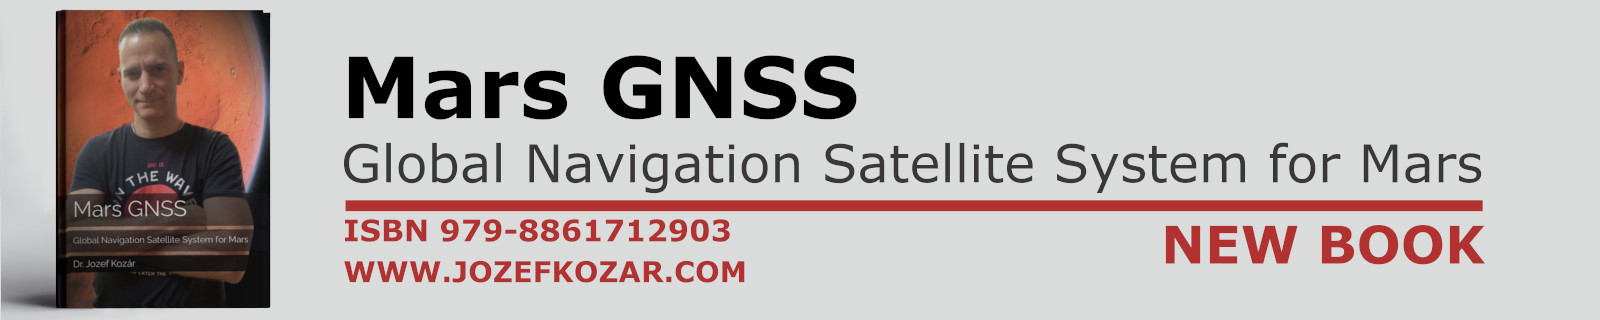 Mars GNSS - Global Navigation Satellite System for Mars